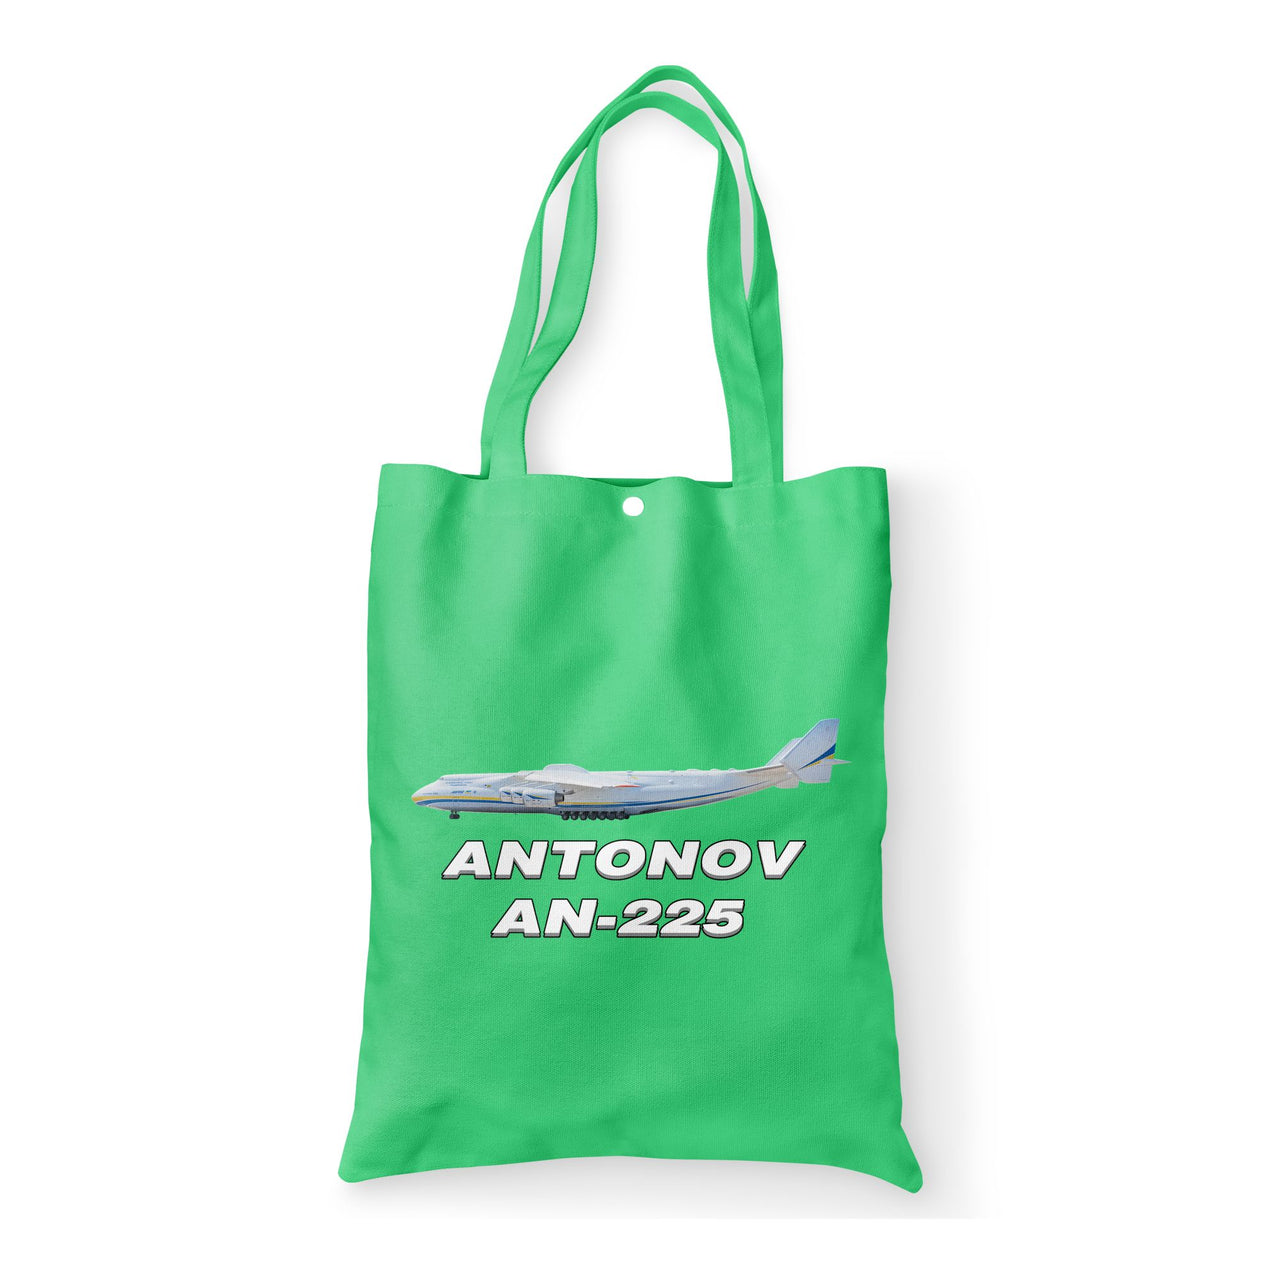 The Antonov AN-225 Designed Tote Bags